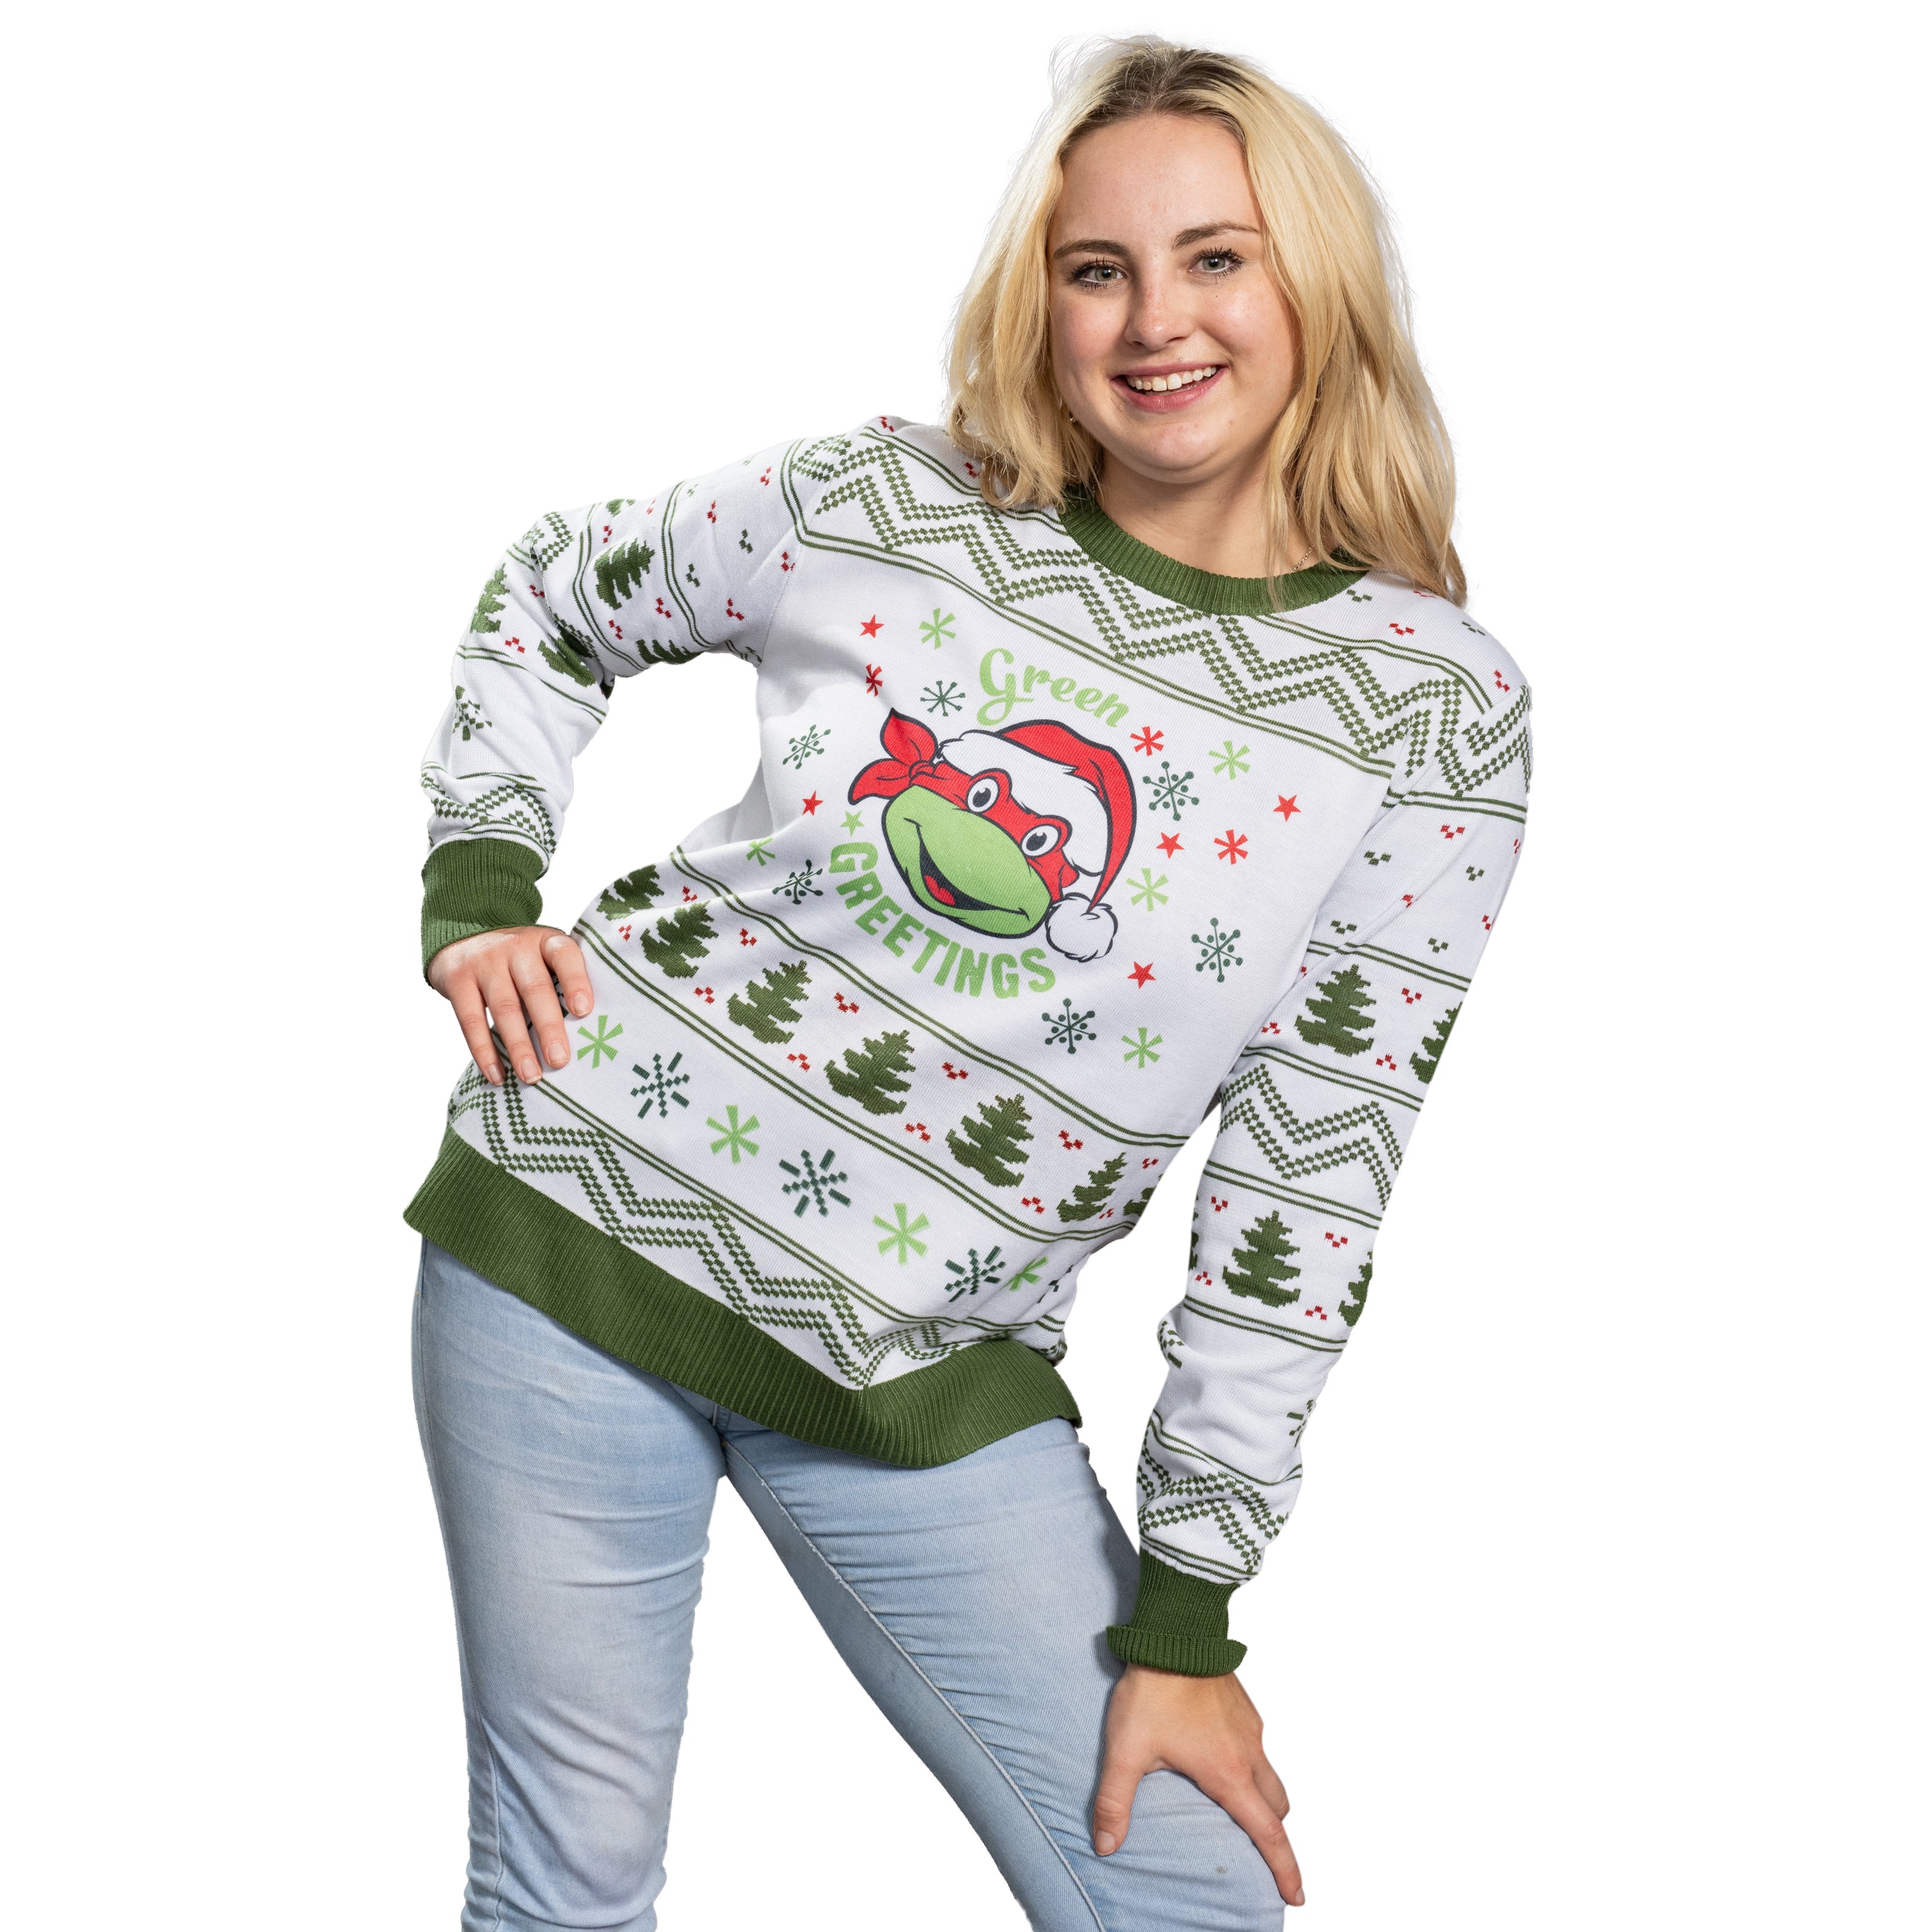 Green Greetings TMNT Christmas Sweater